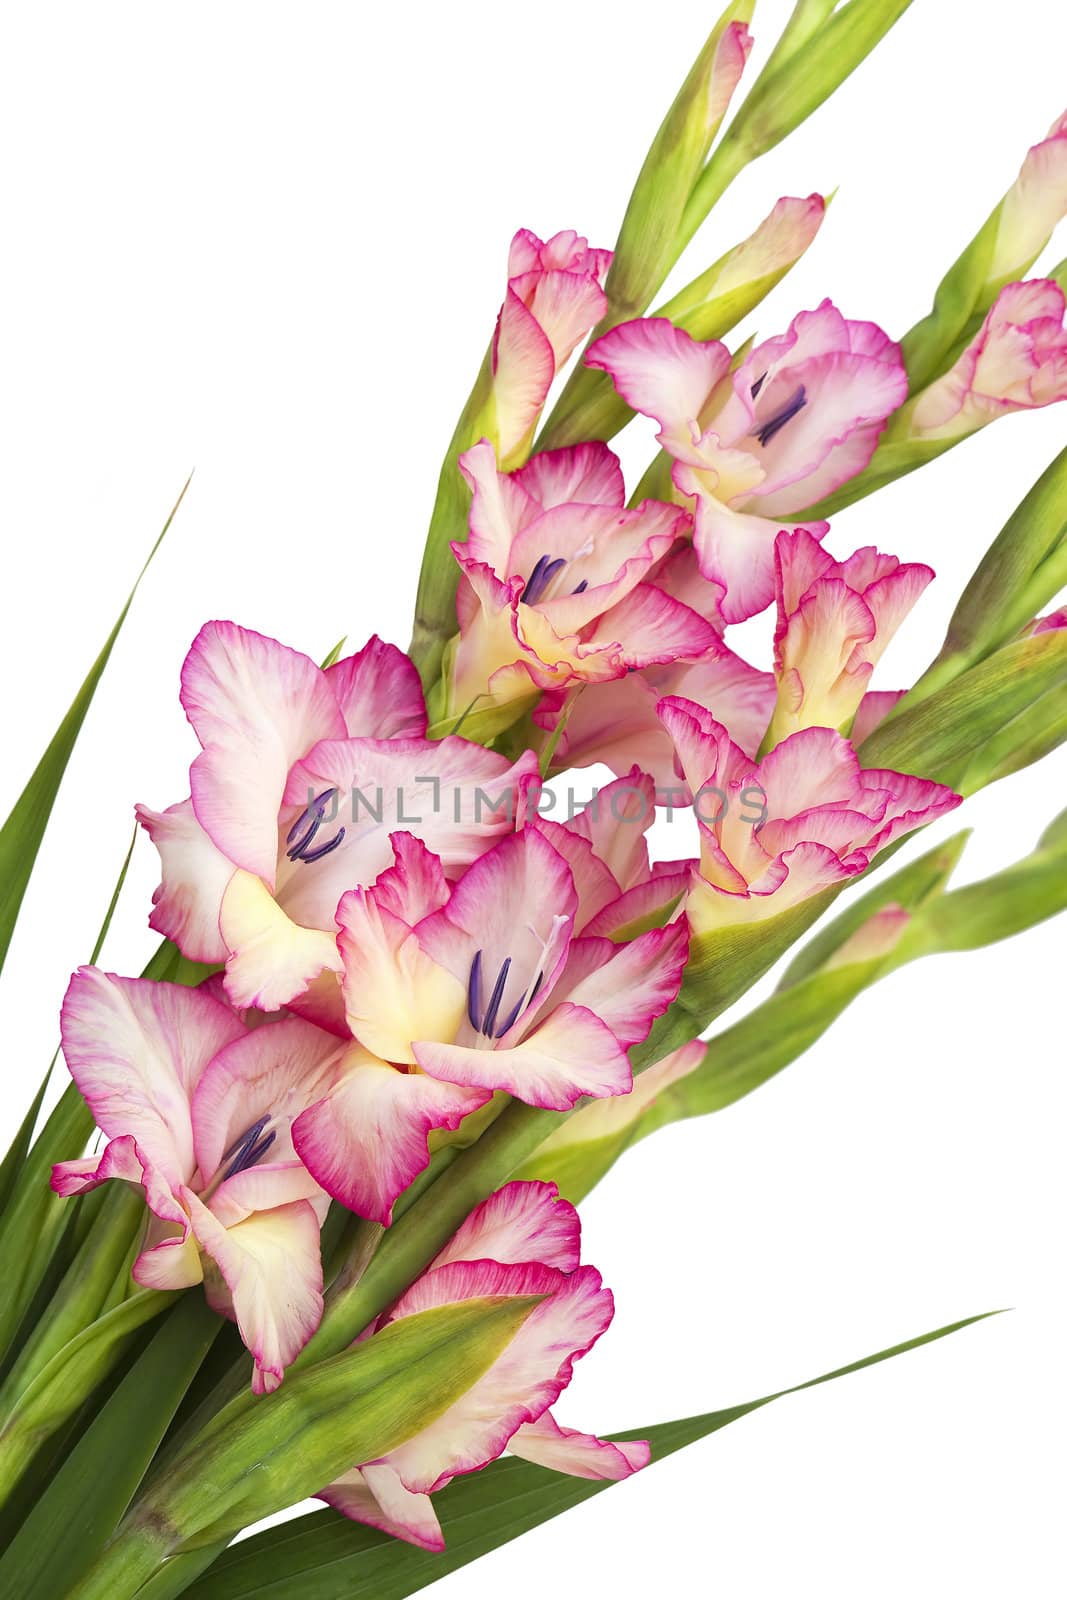 pink gladiolus by miradrozdowski